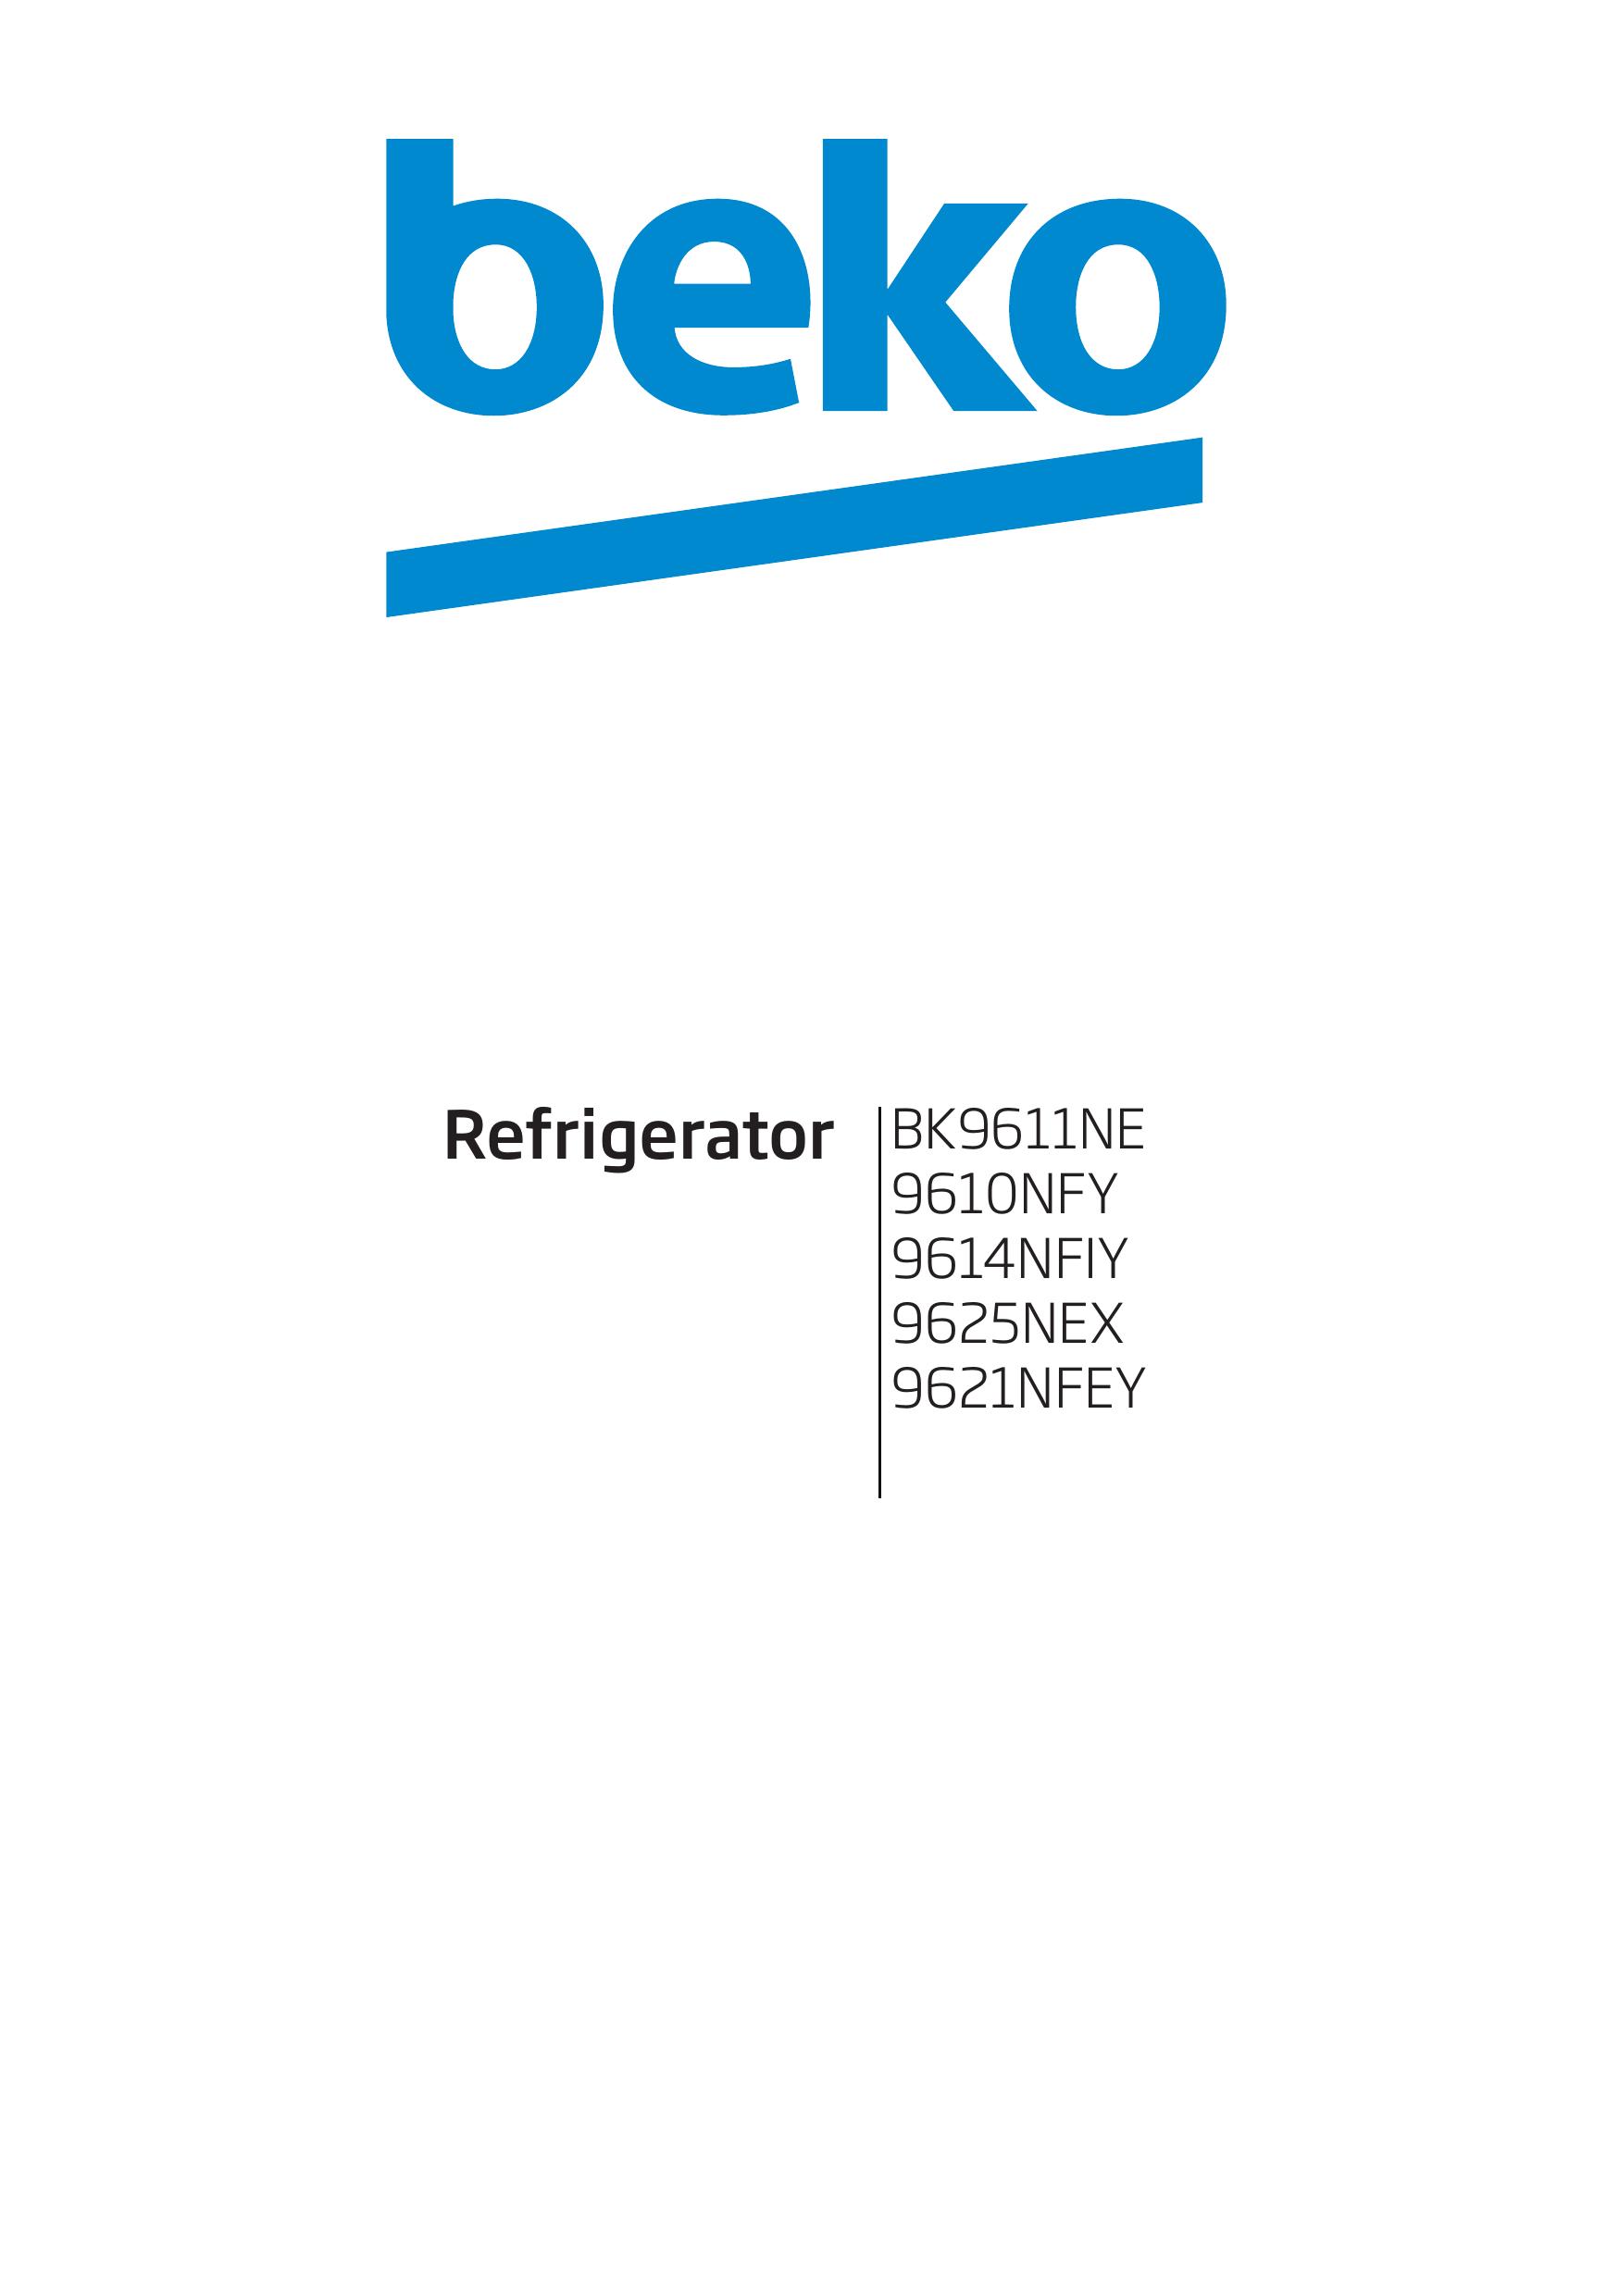 Beko 9614NFIY Refrigerator User Manual